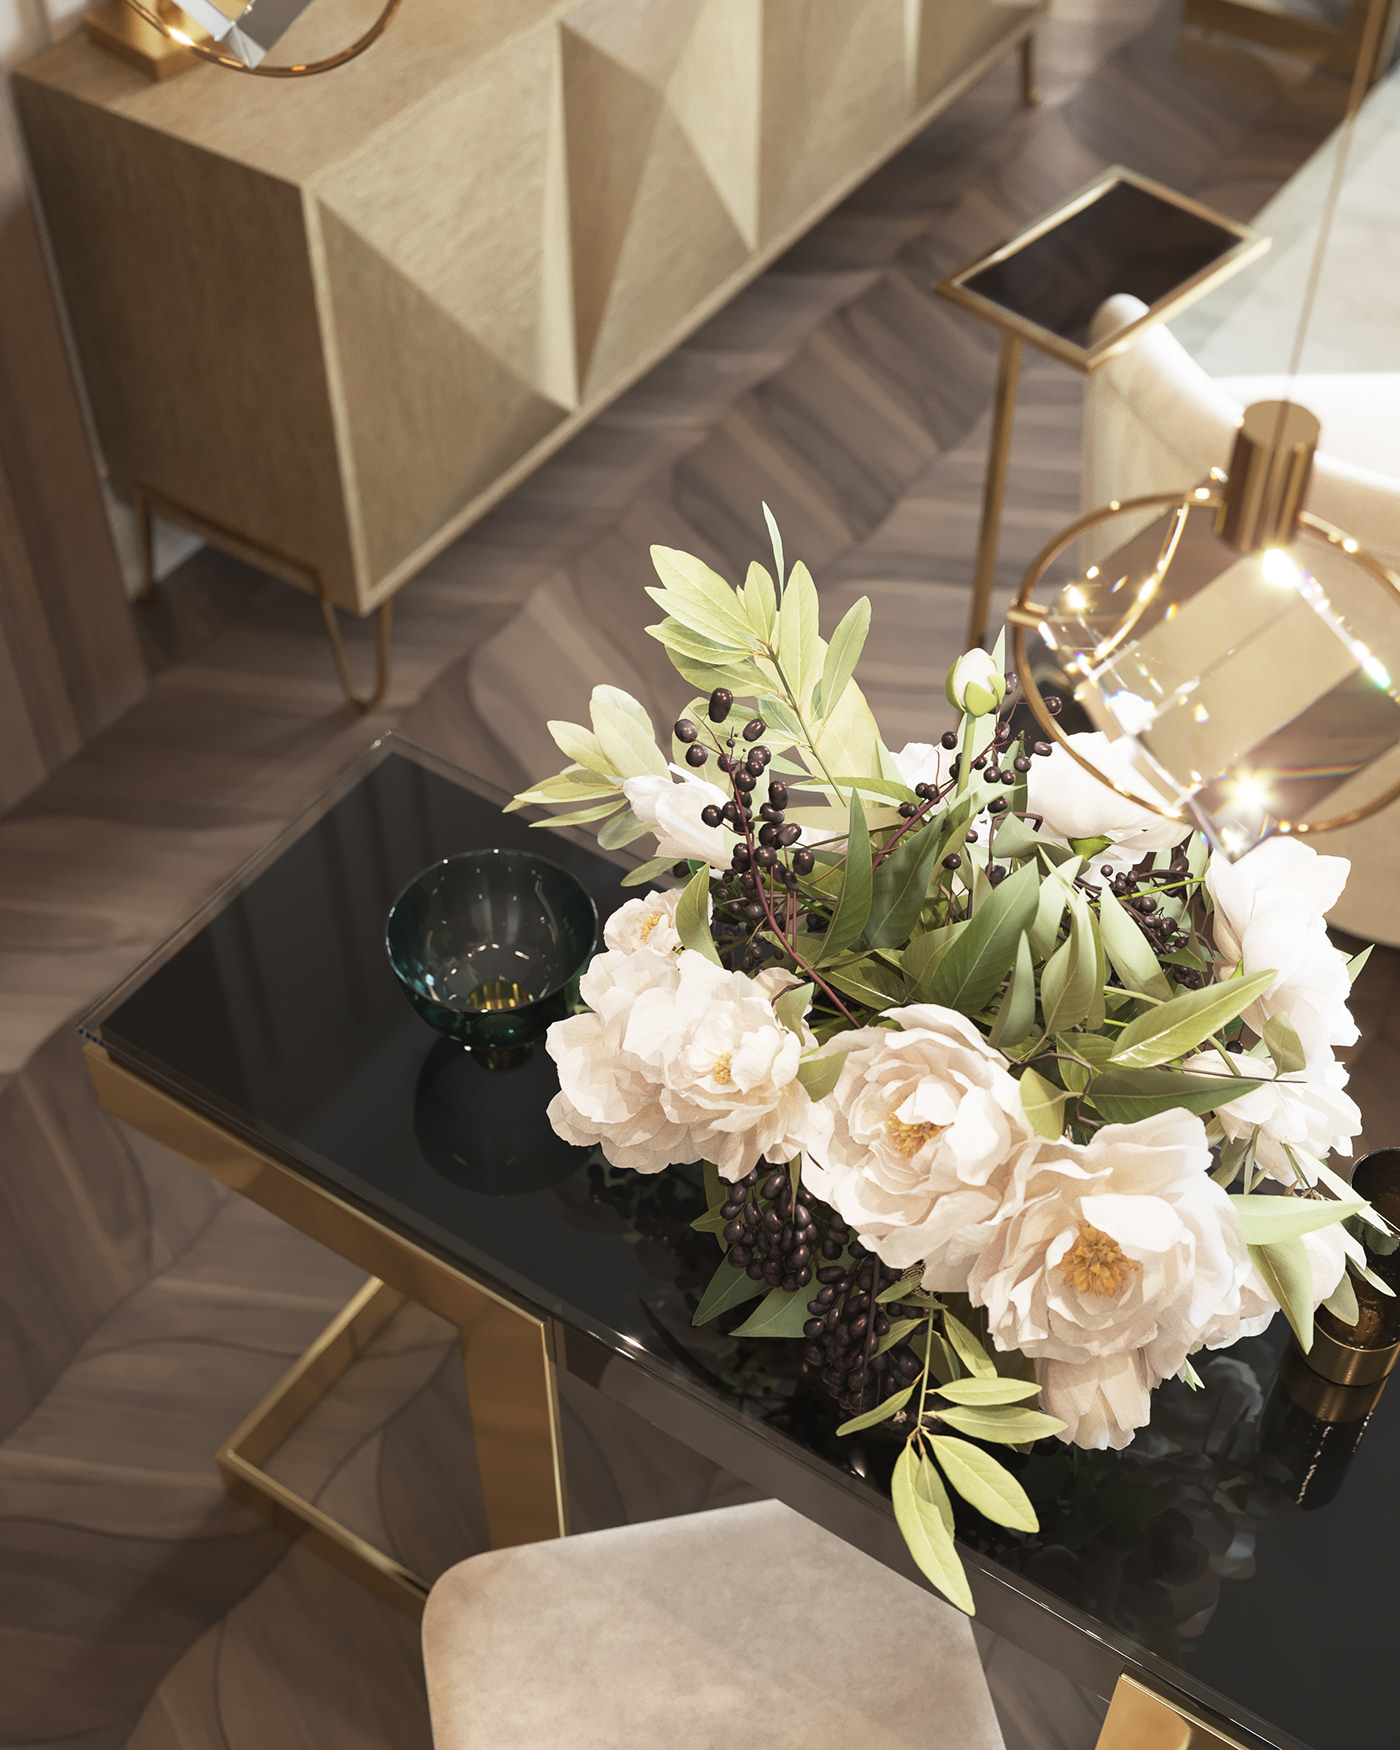 3dmax architecture bedroom design Interior kitchen livingroom Render visual visualization